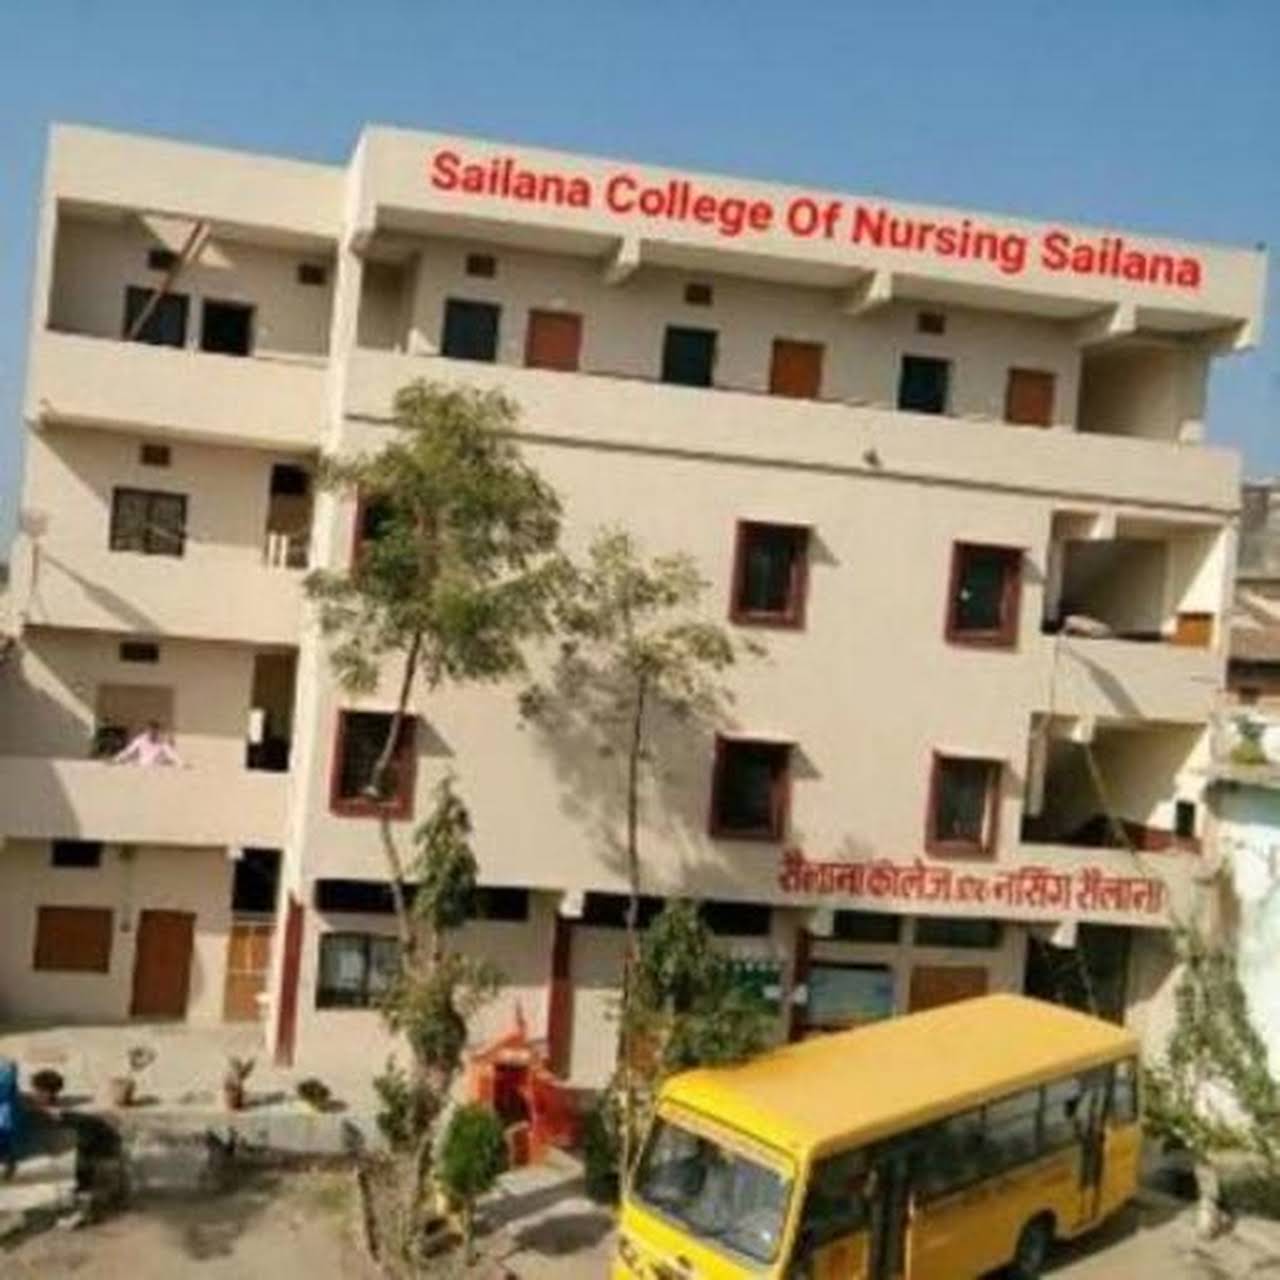 Sailana College Of Nursing Image